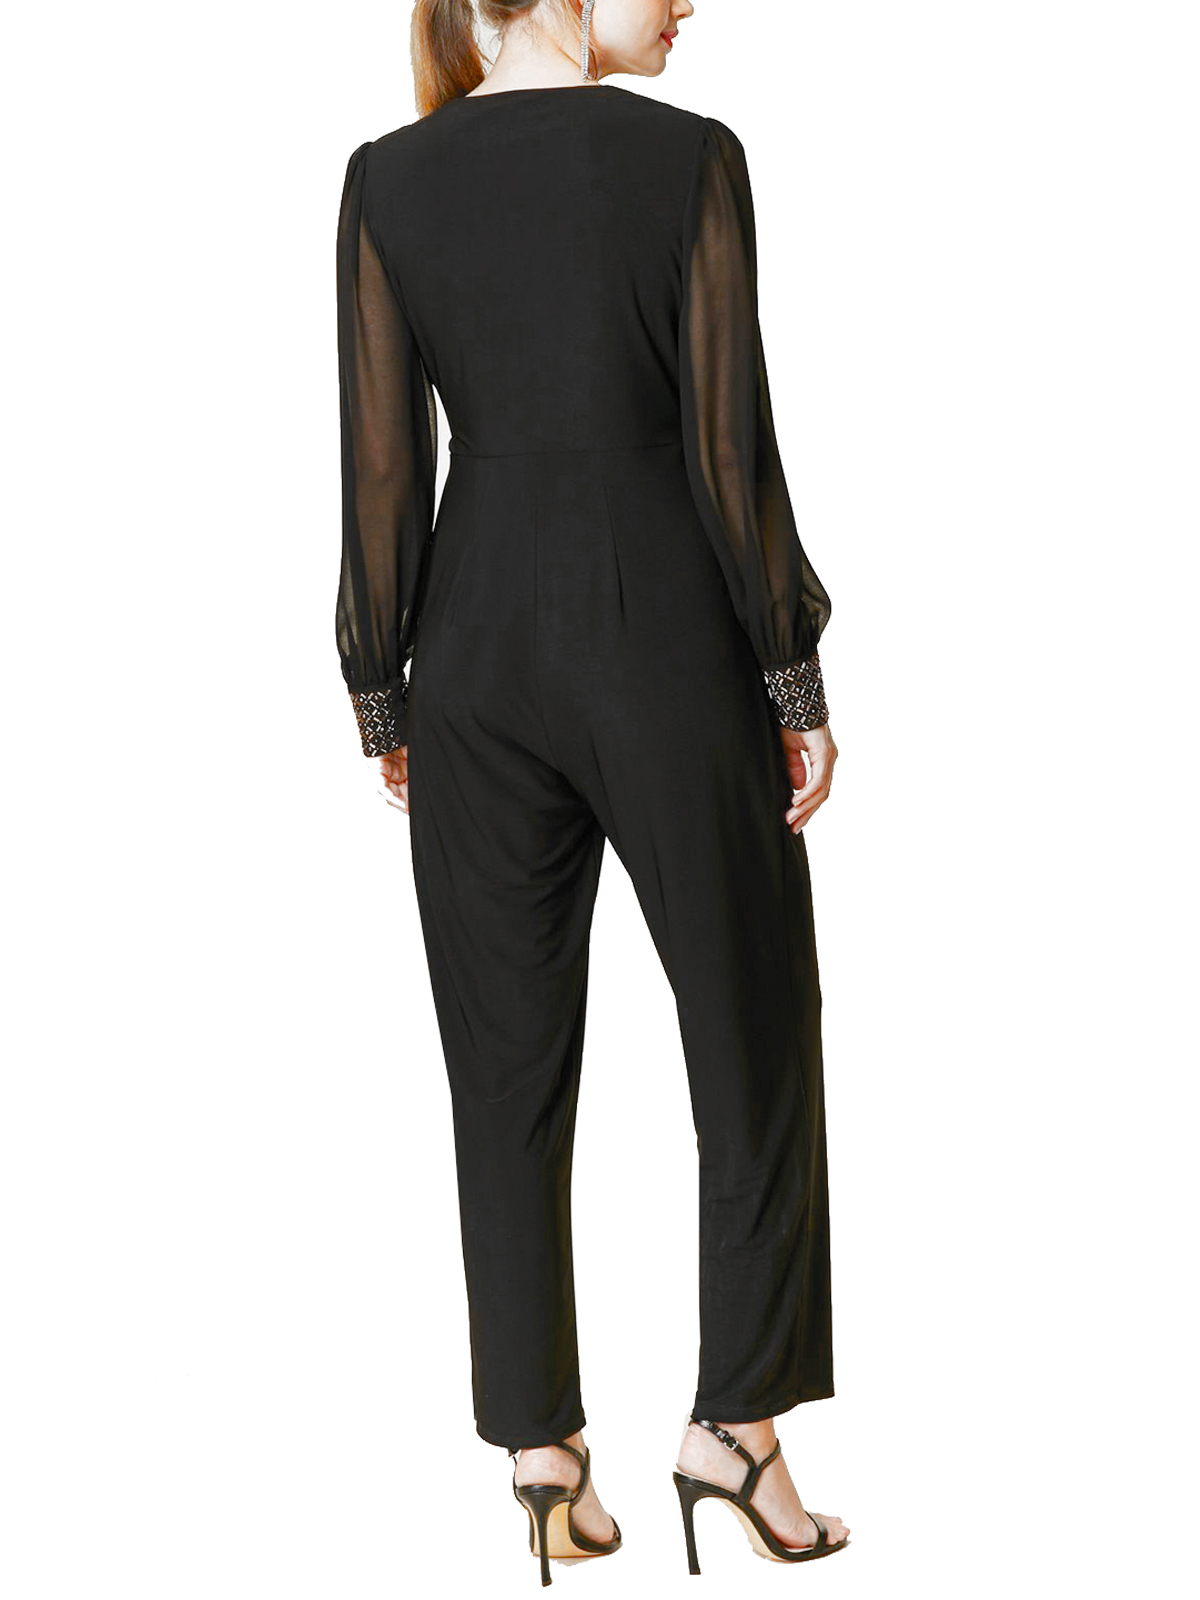 W4LLIS BLACK Petite Embellished Cuff Jumpsuit - Size 8 to 18